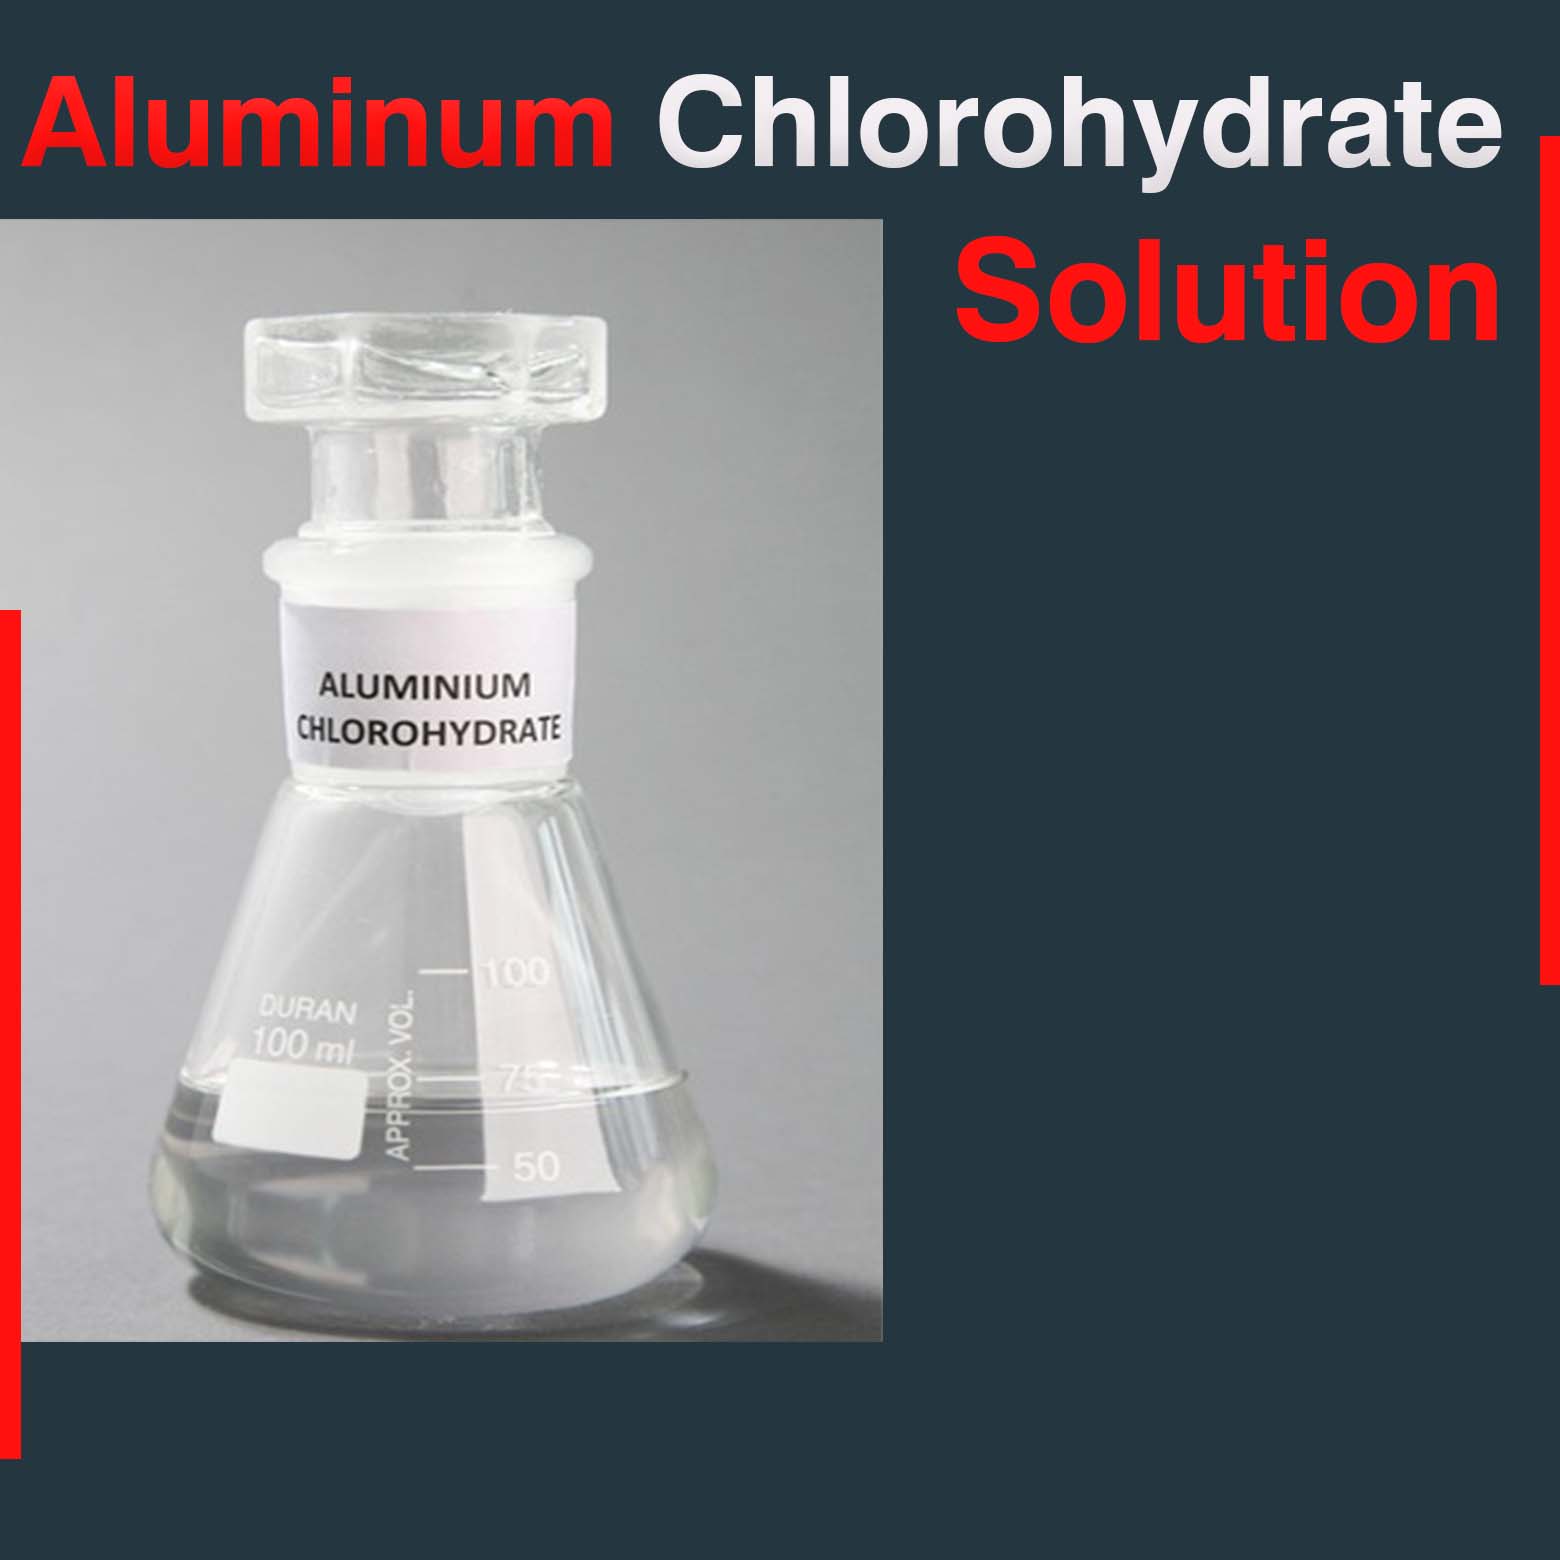 Aluminum Chlorohydrate Solution In Tanzania